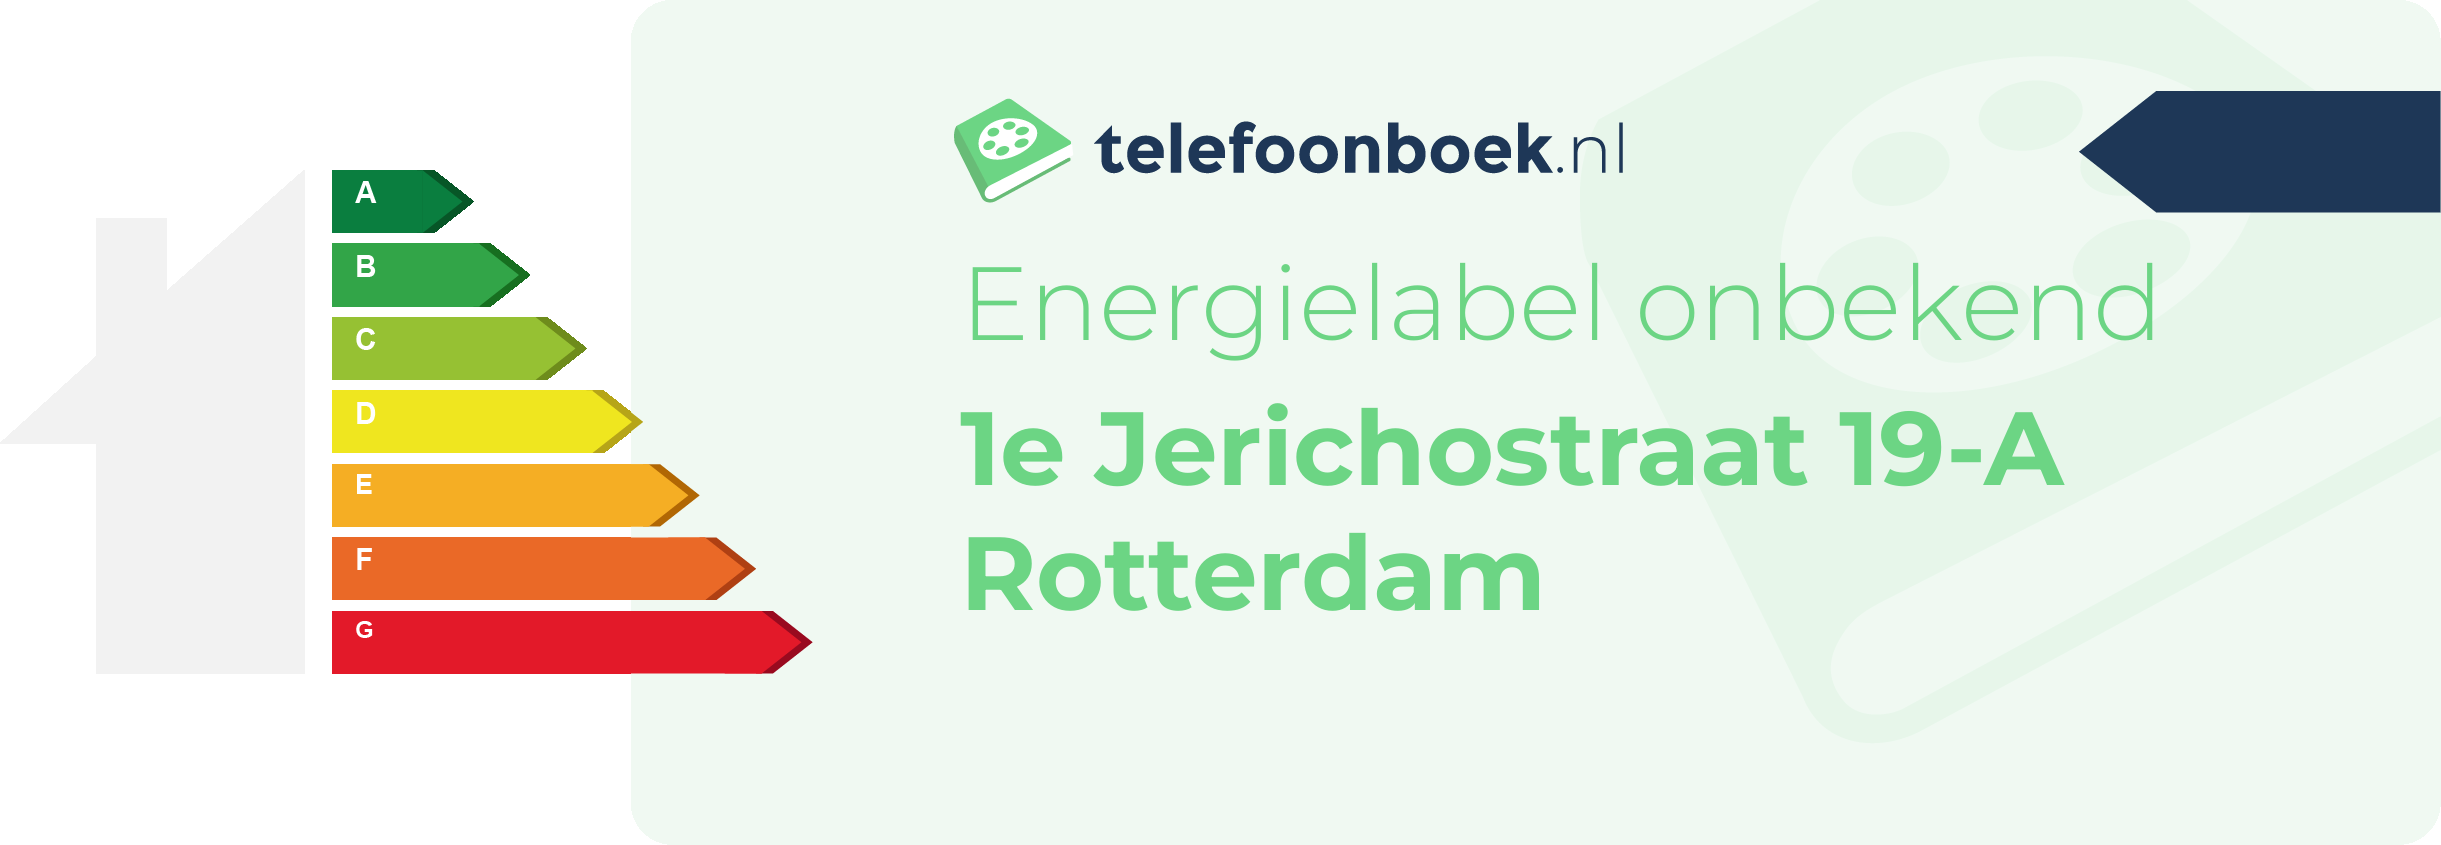 Energielabel 1e Jerichostraat 19-A Rotterdam